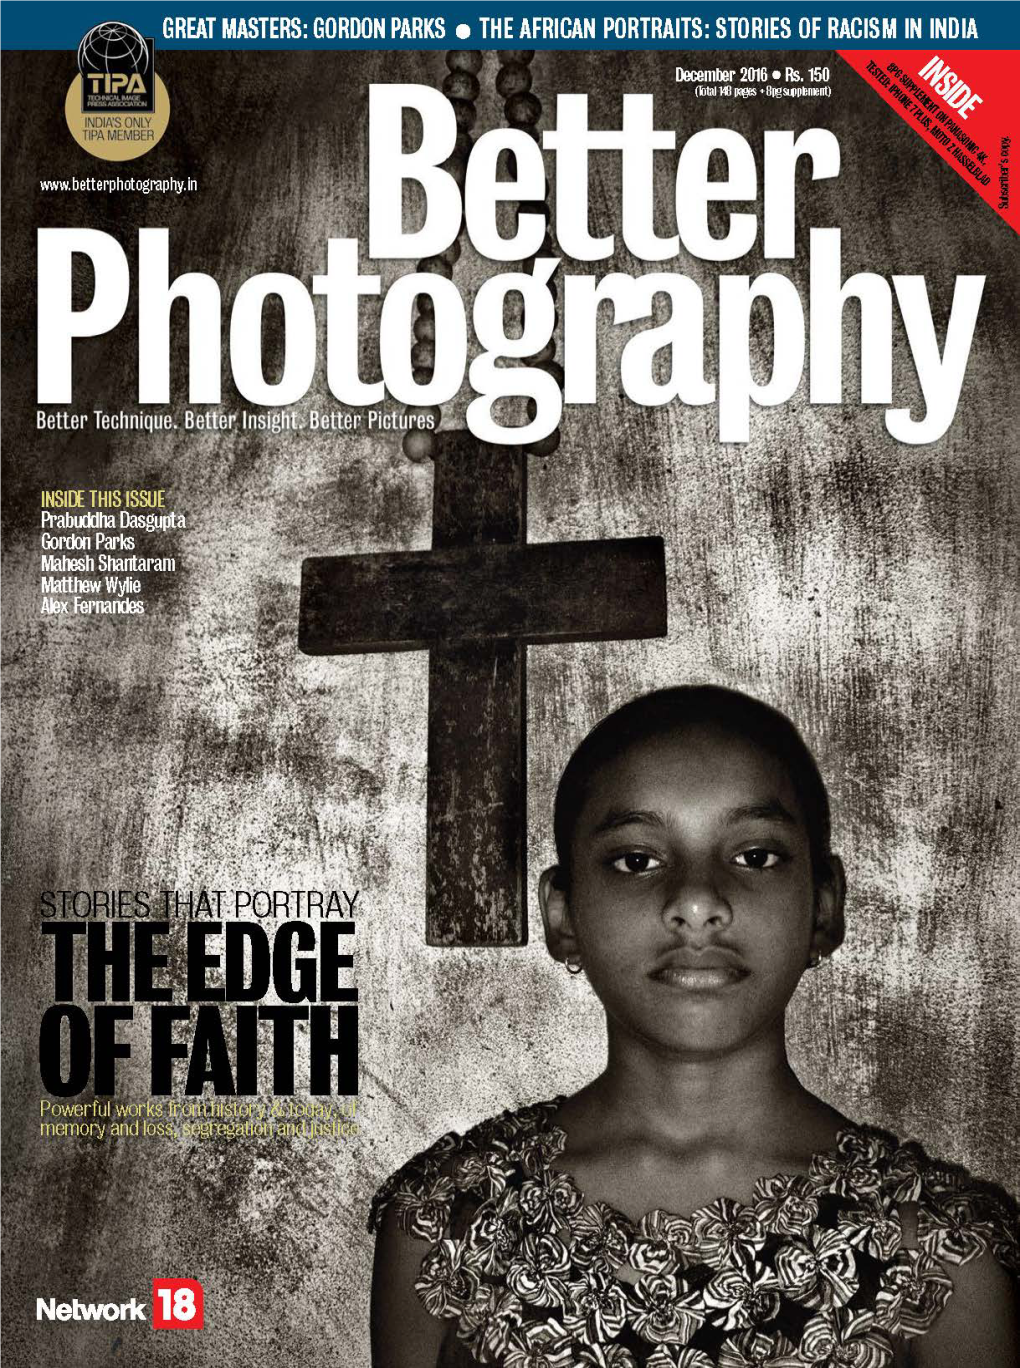 Better Photography December 2016 VOLUME 20 • ISSUE 7 • DECEMBER 2016